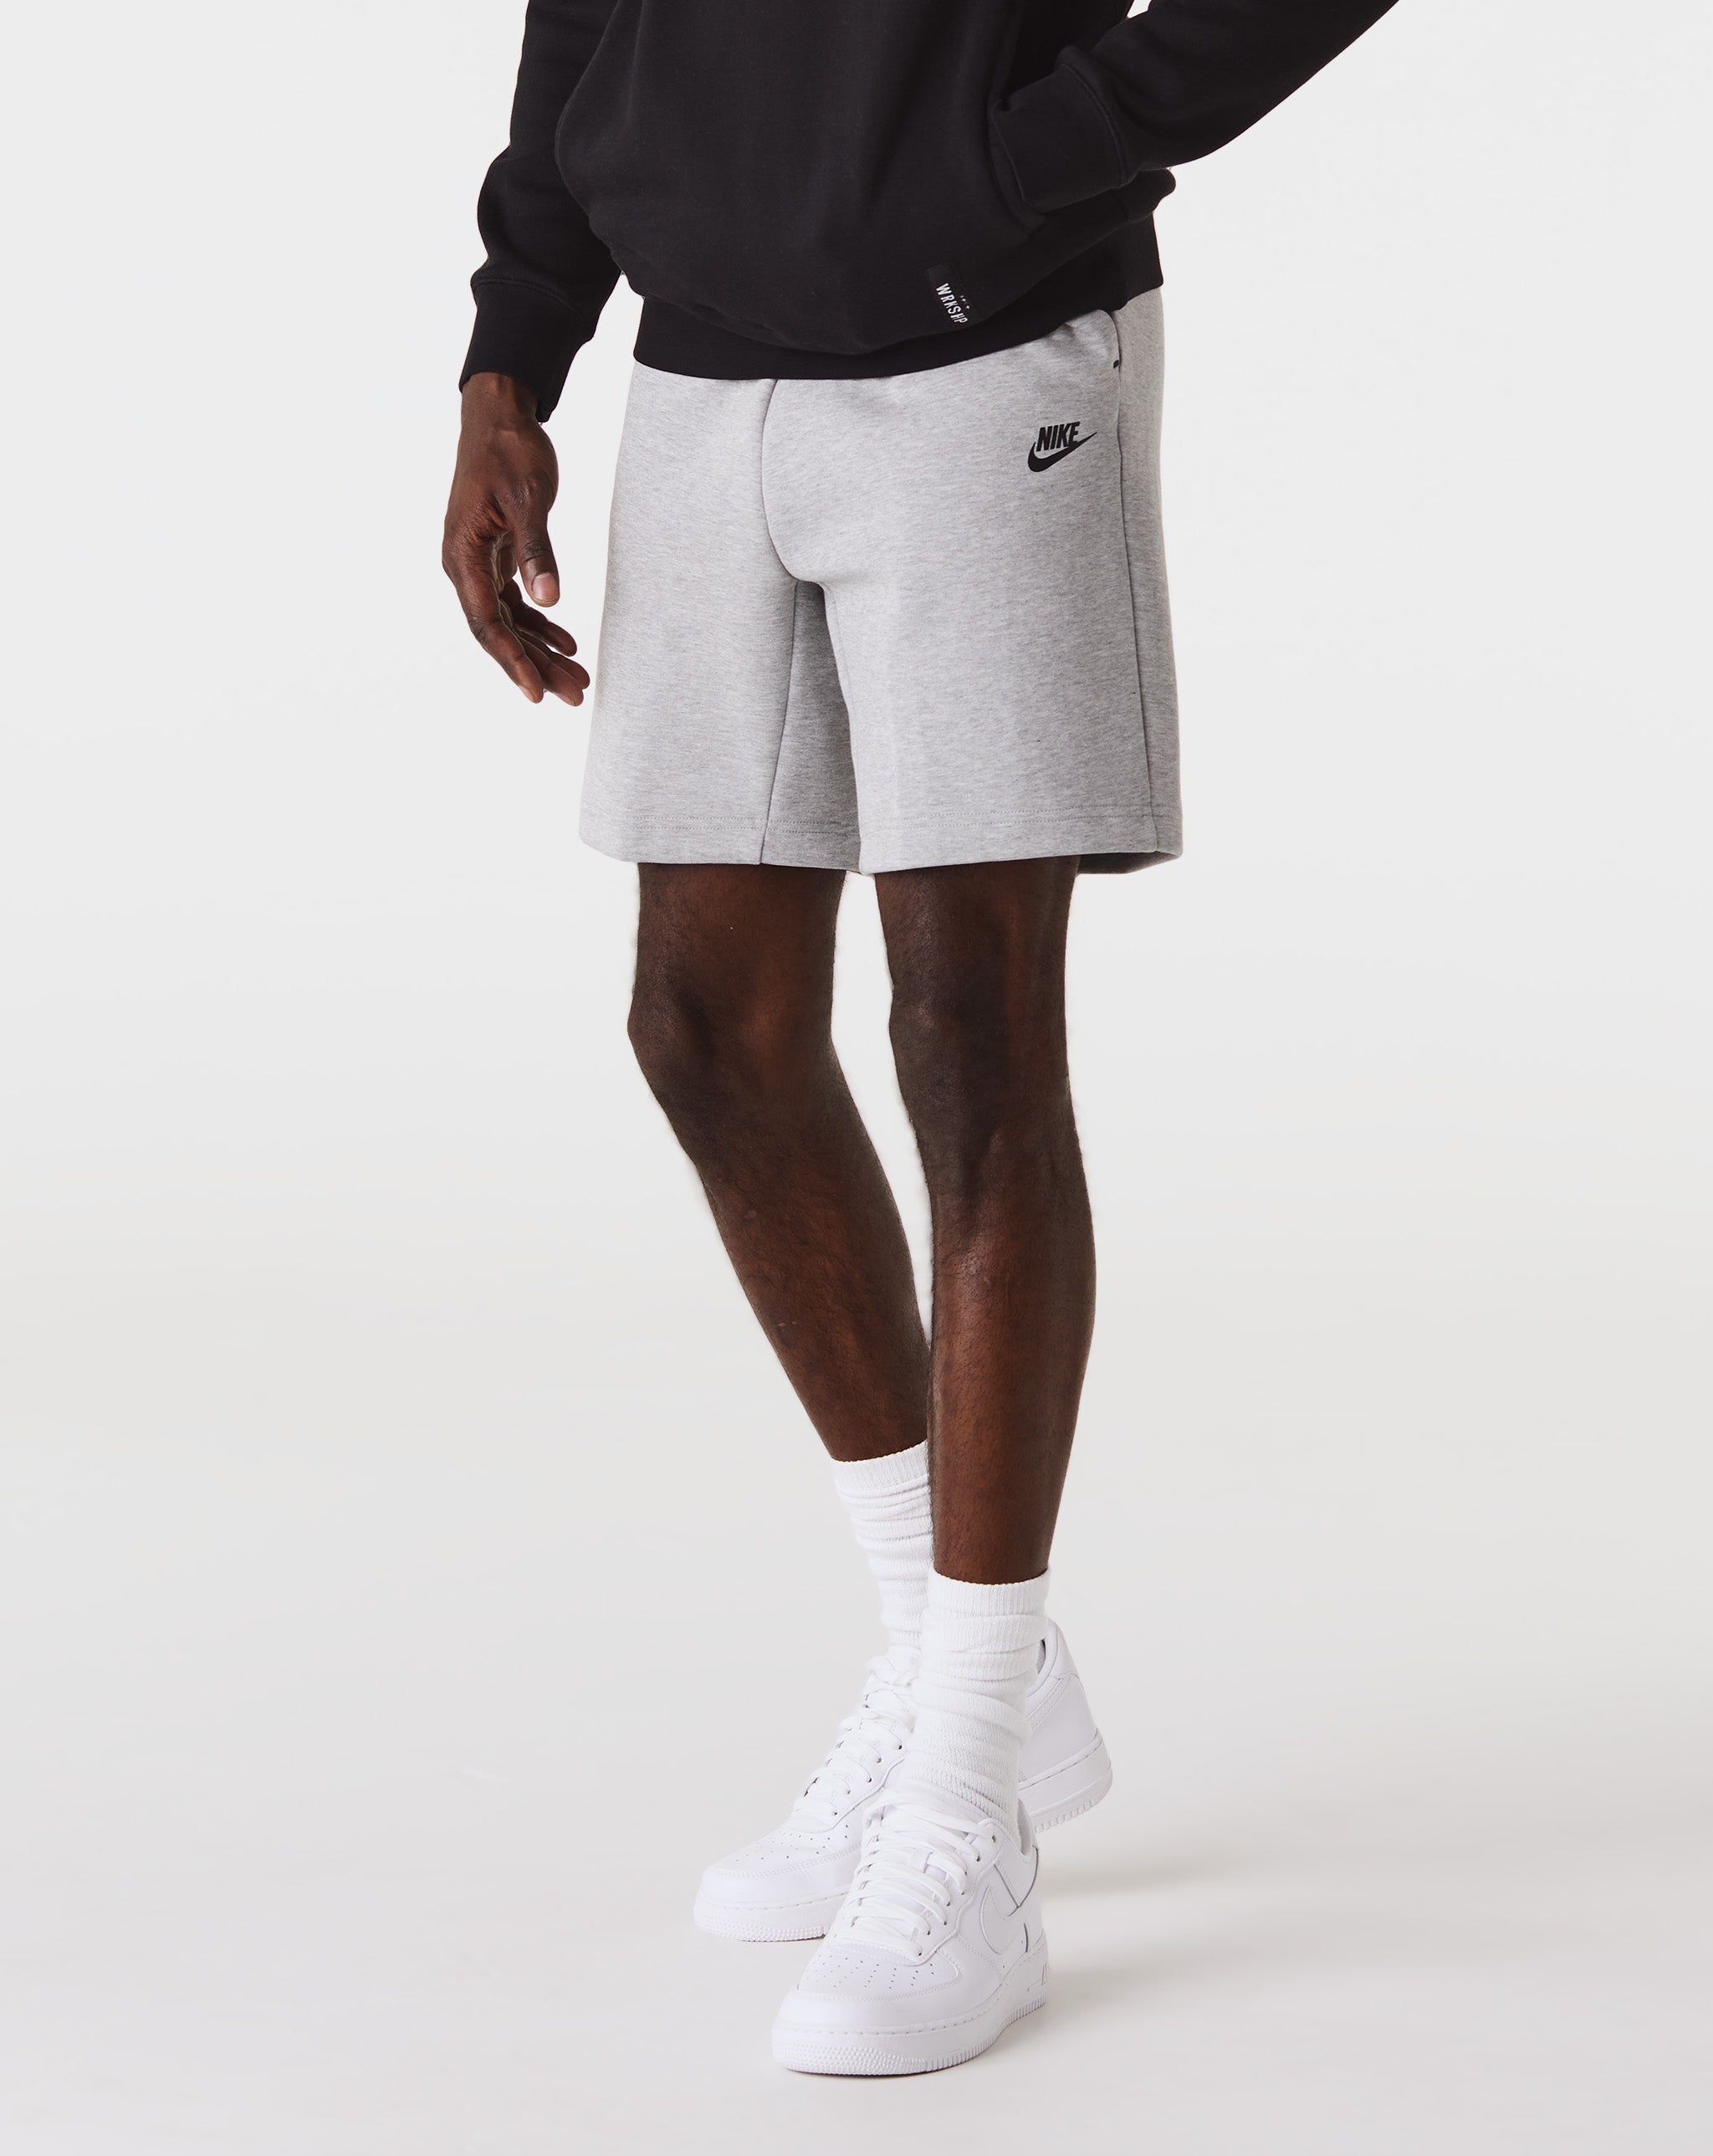 Nike Floral Print High Neck Mini Dress  - Cheap Urlfreeze Jordan outlet